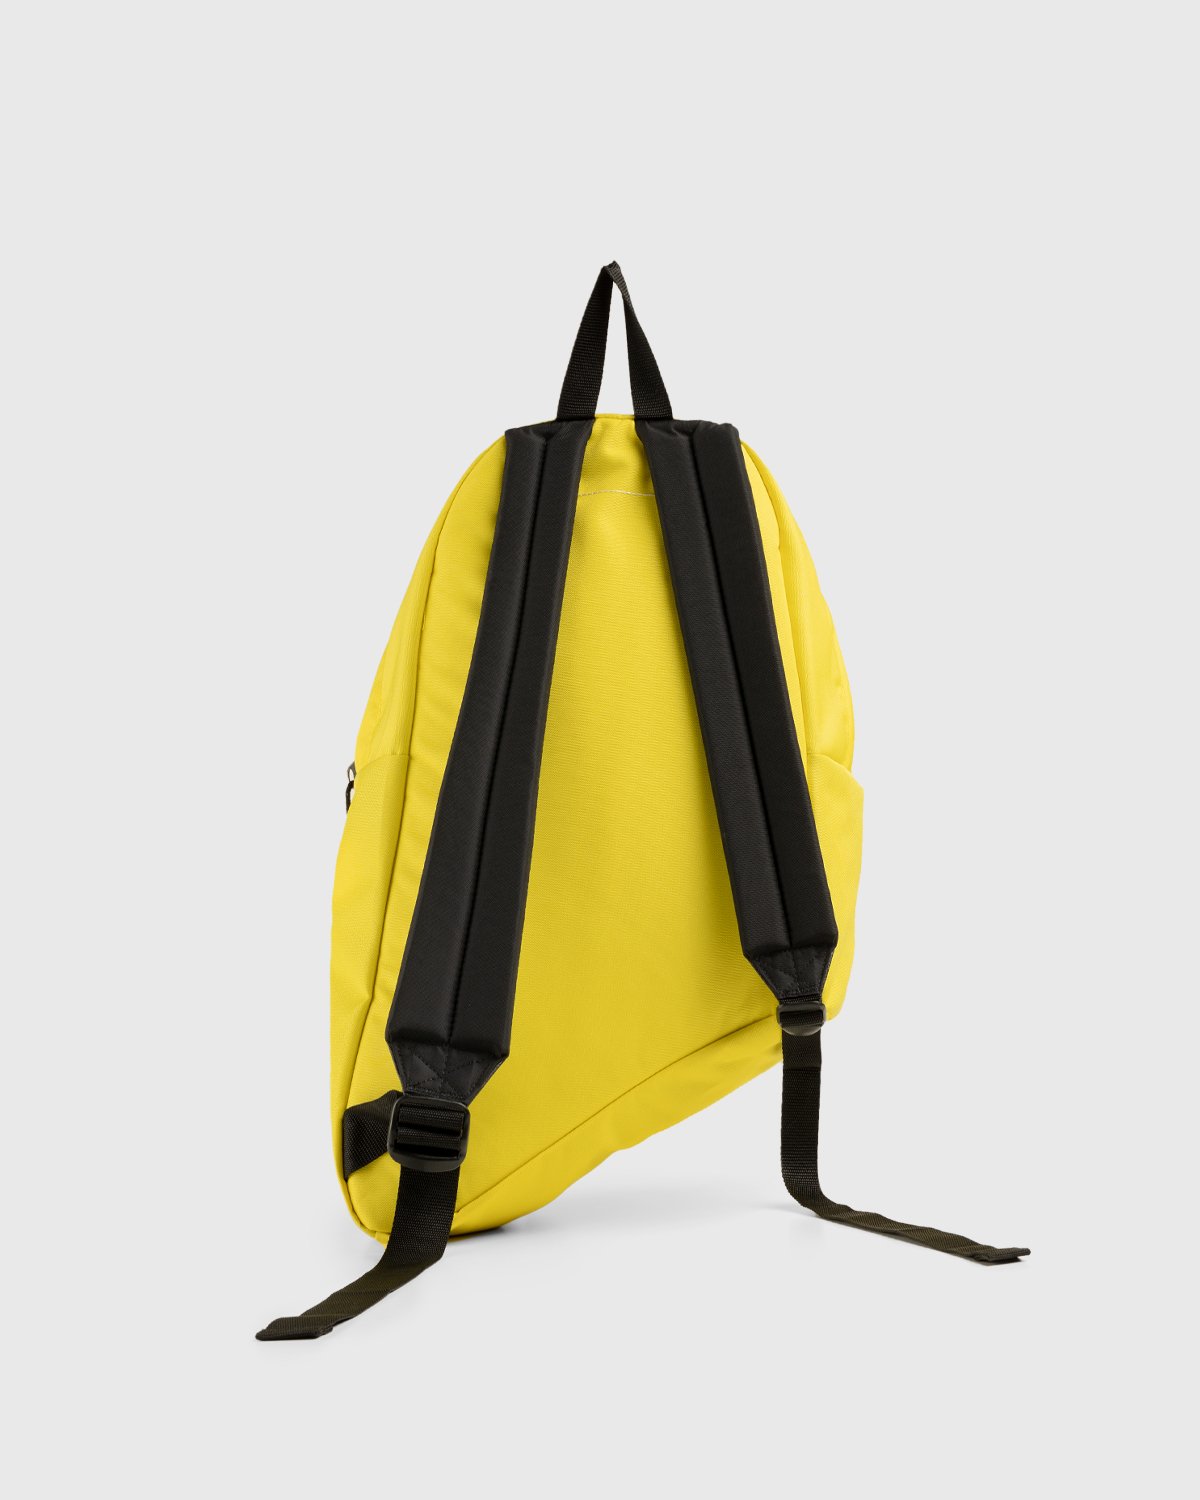 MM6 Maison Margiela x Eastpak - Zaino Backpack Yellow - Accessories - Yellow - Image 6